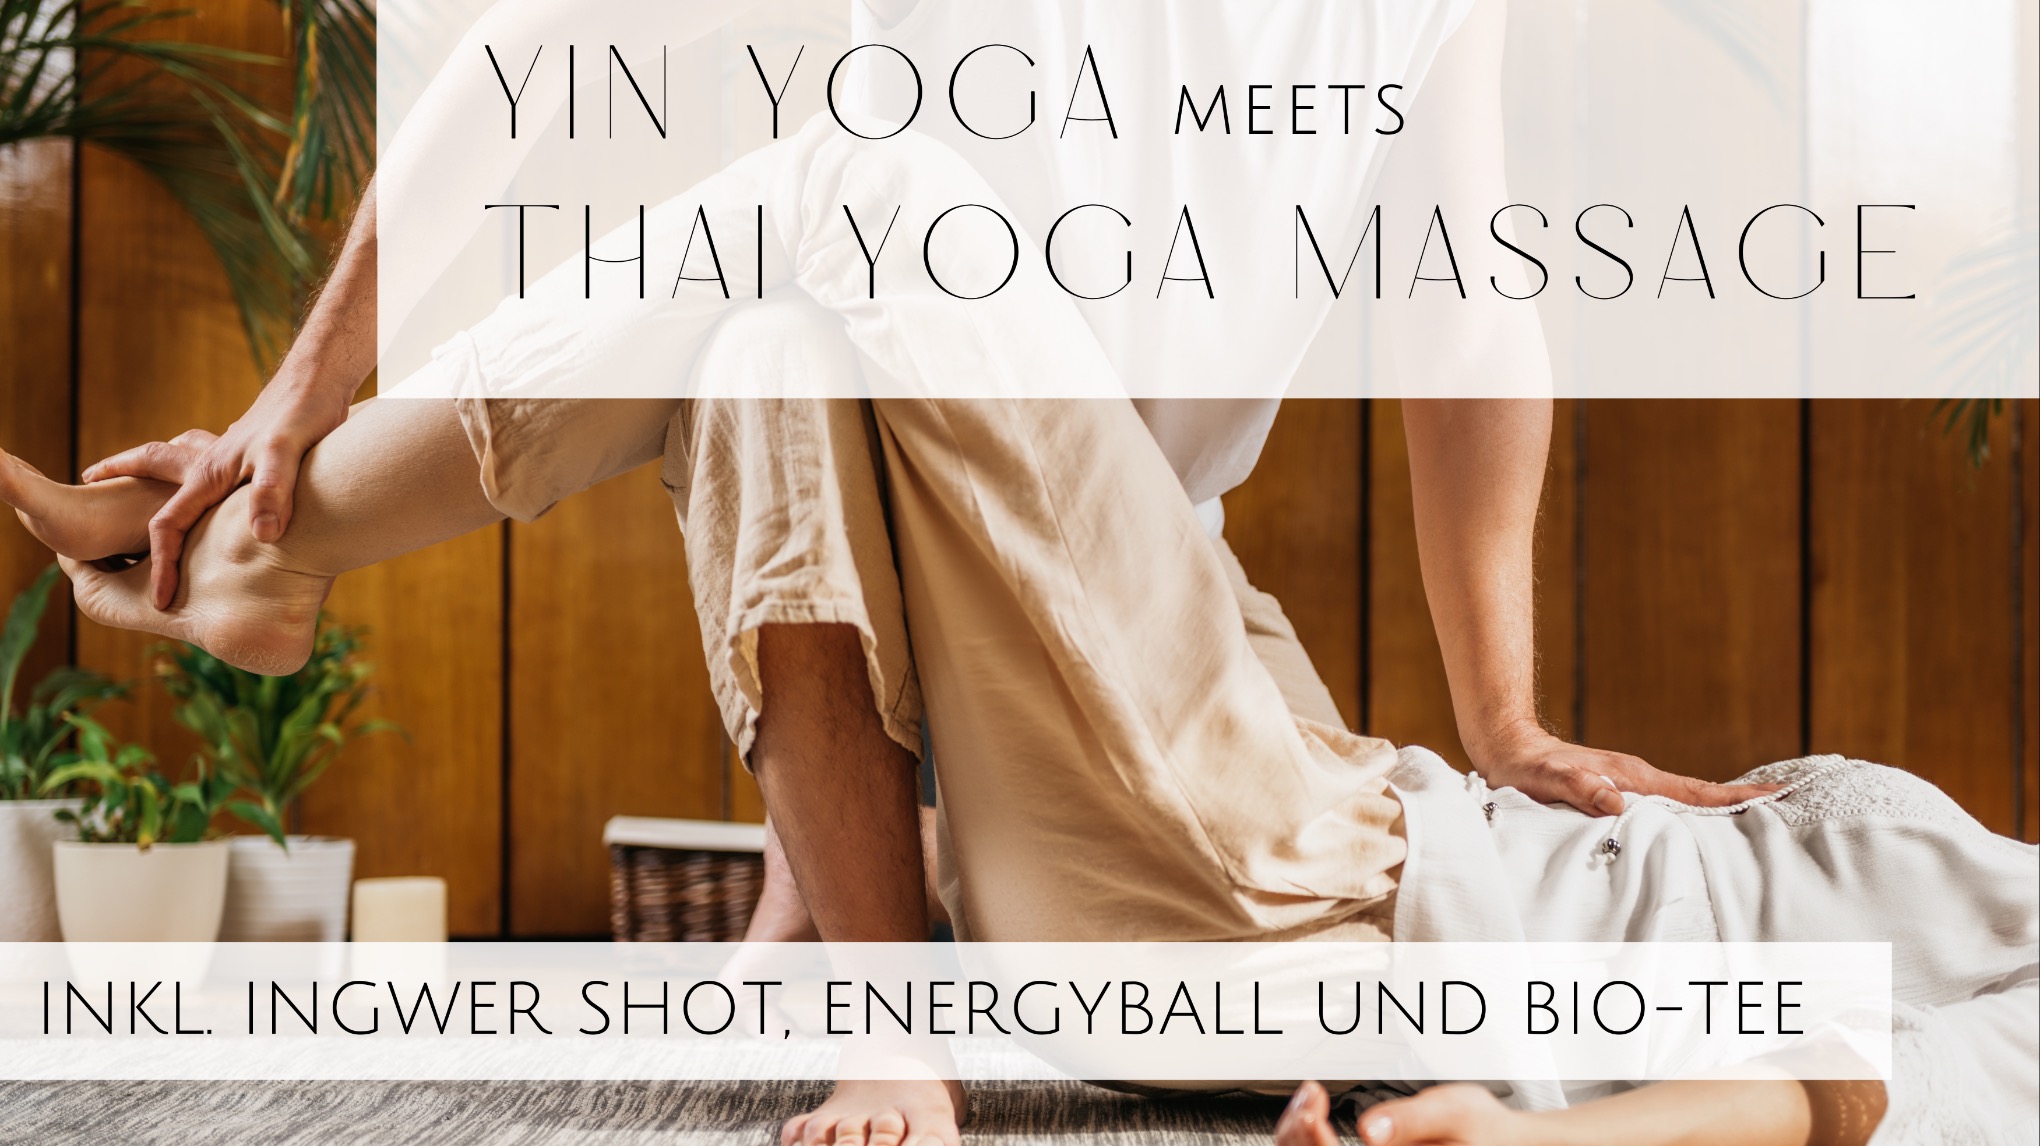 Yin Yoga meets Thai Yoga Massage